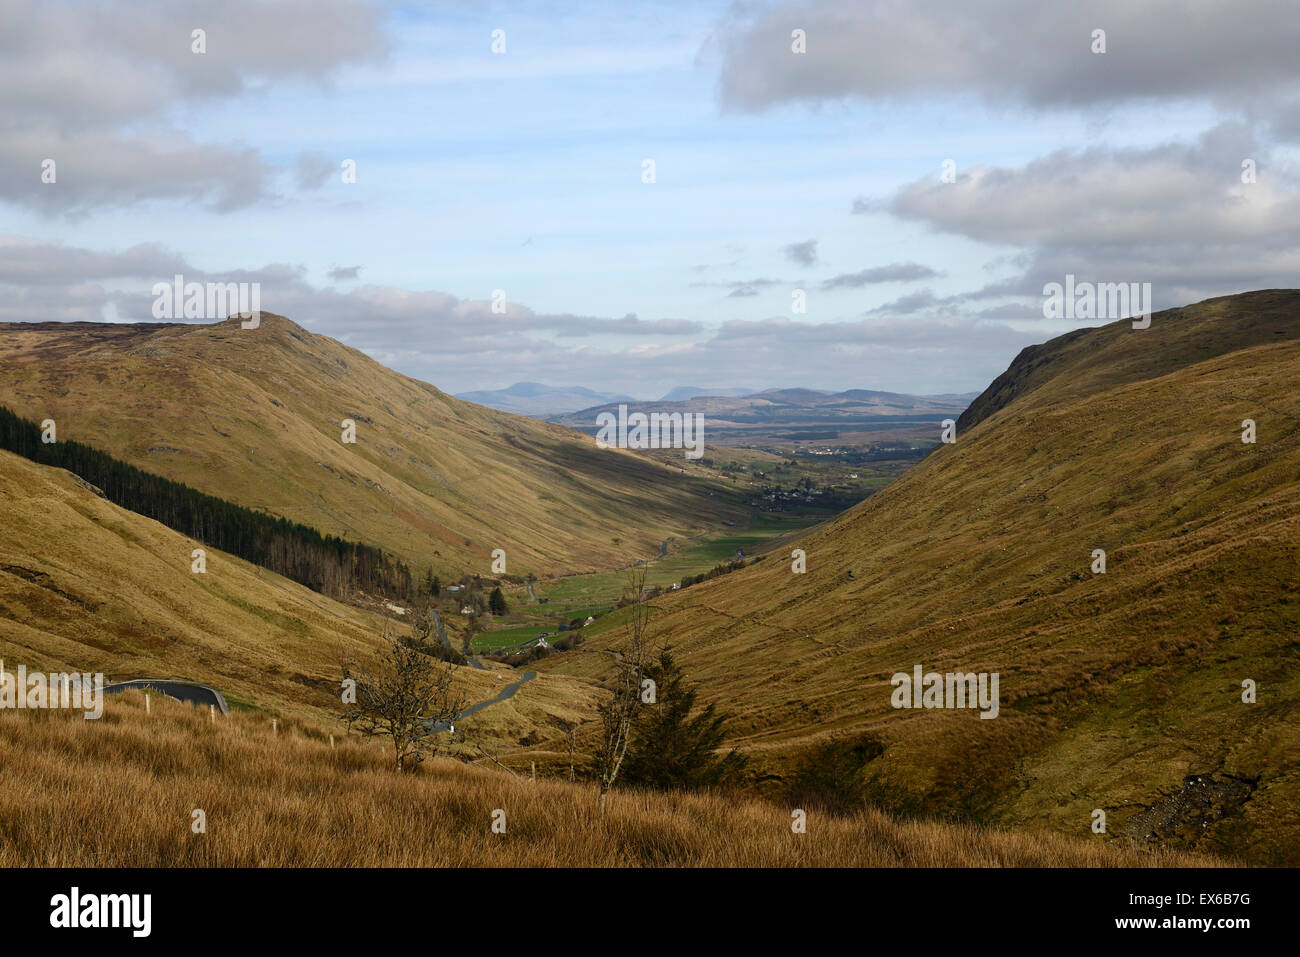 Donegal Ardara scenery paysage pittoresque tourisme donnent sur RM vue Irlande Banque D'Images